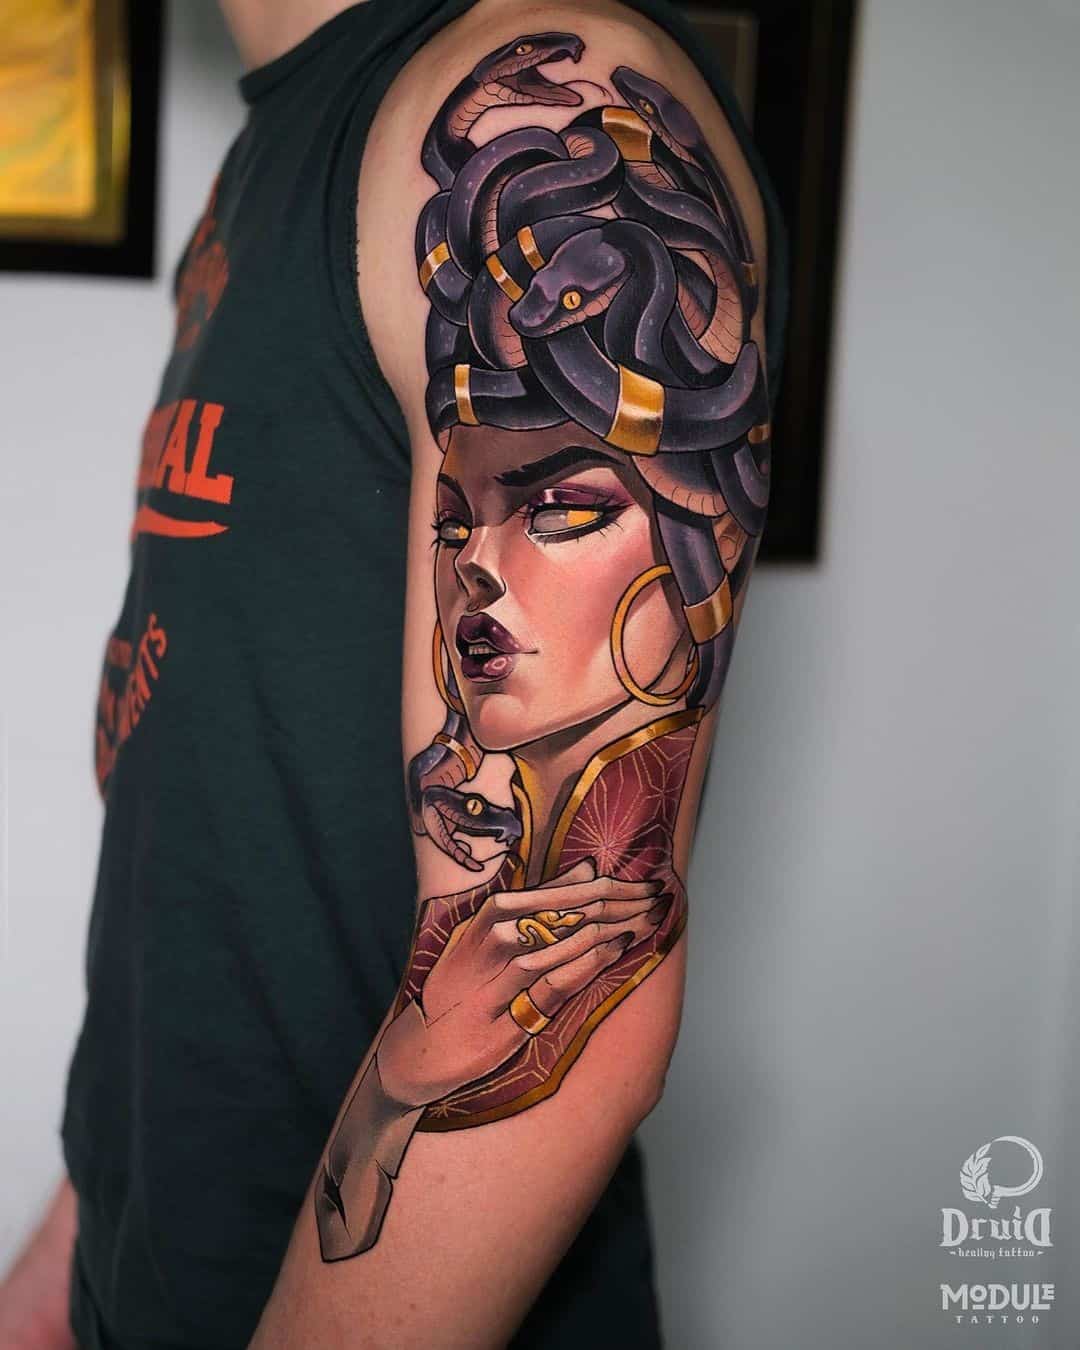 Medusa Tattoo by Monica Snyder  Eden Body Art Studios in Dallas Tx  r tattoos